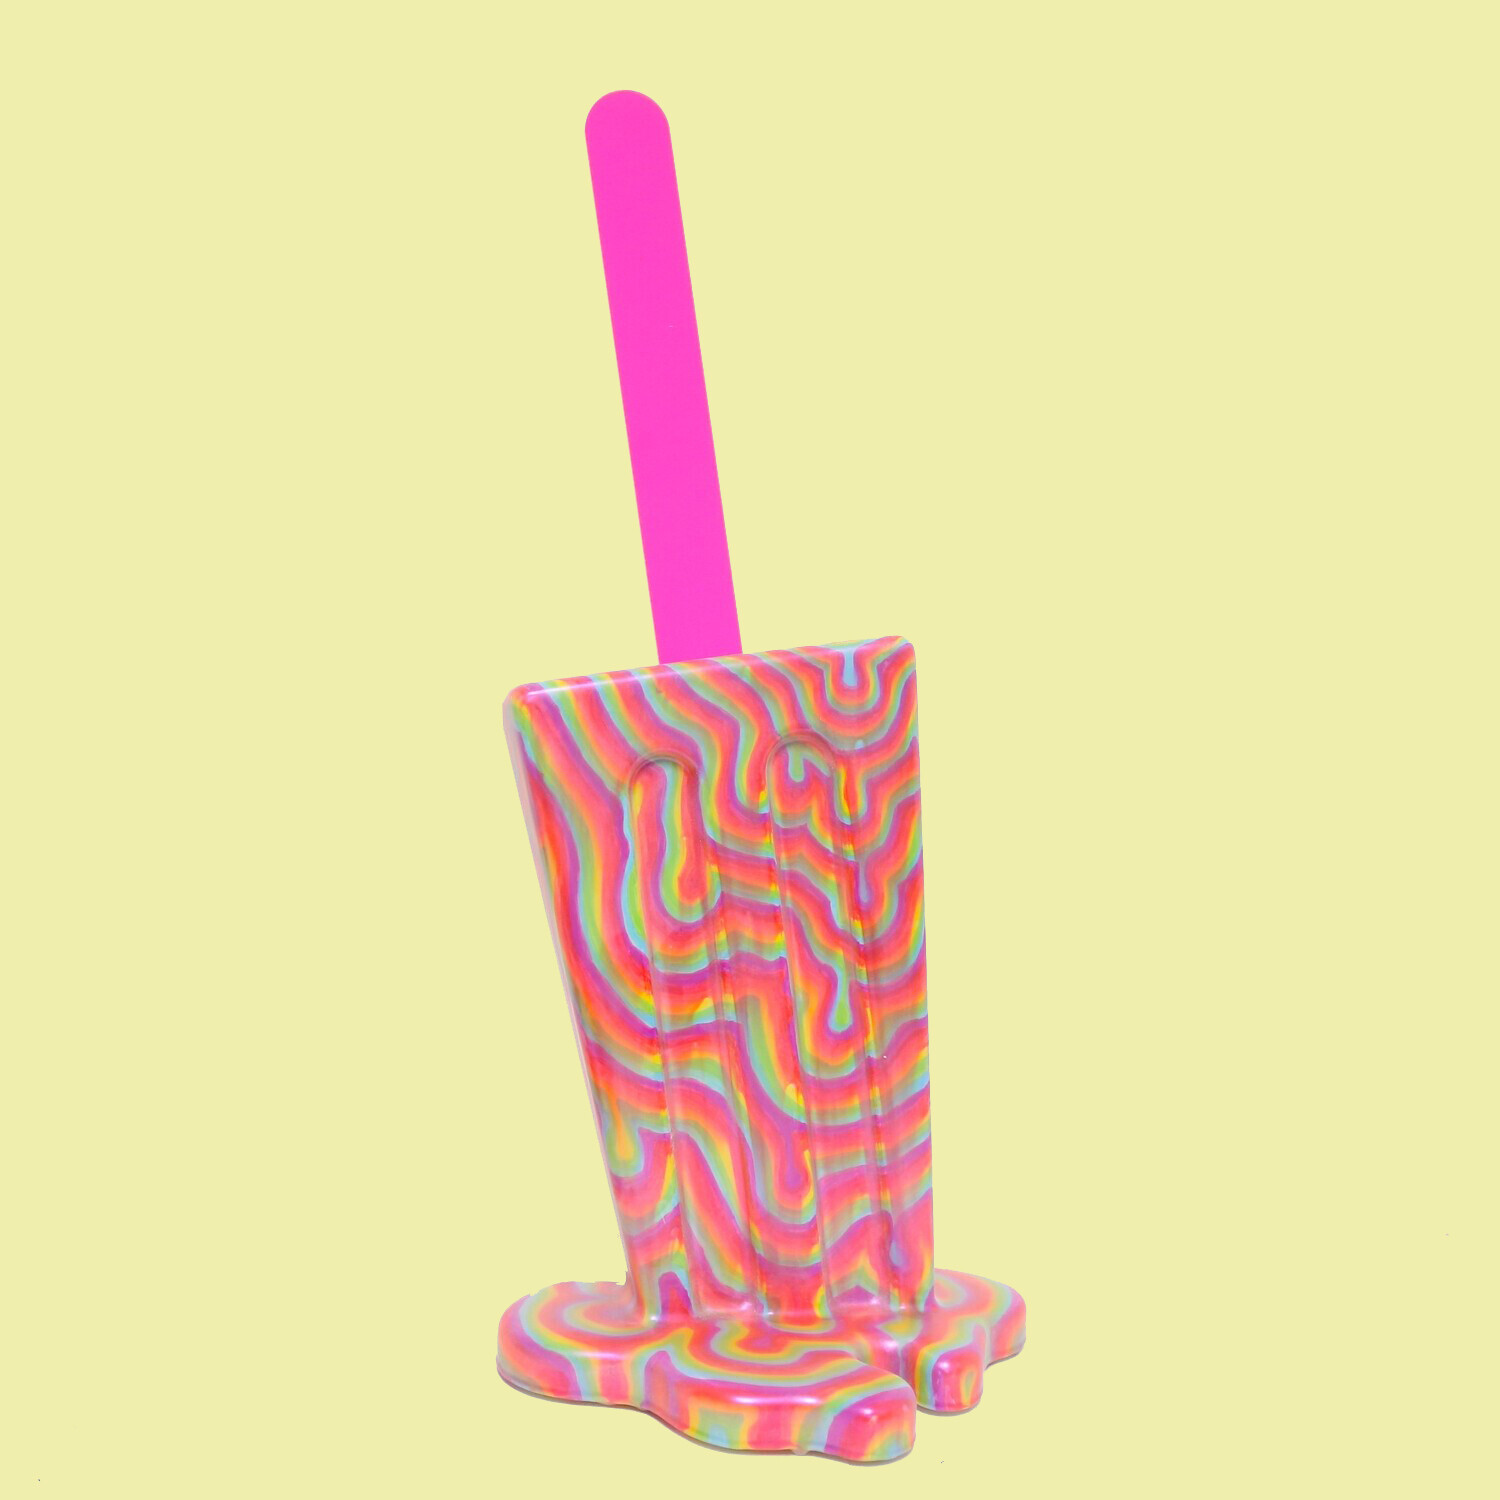 Melting Popsicle Art - Electric Rainbow Pop - Original Melting Pops